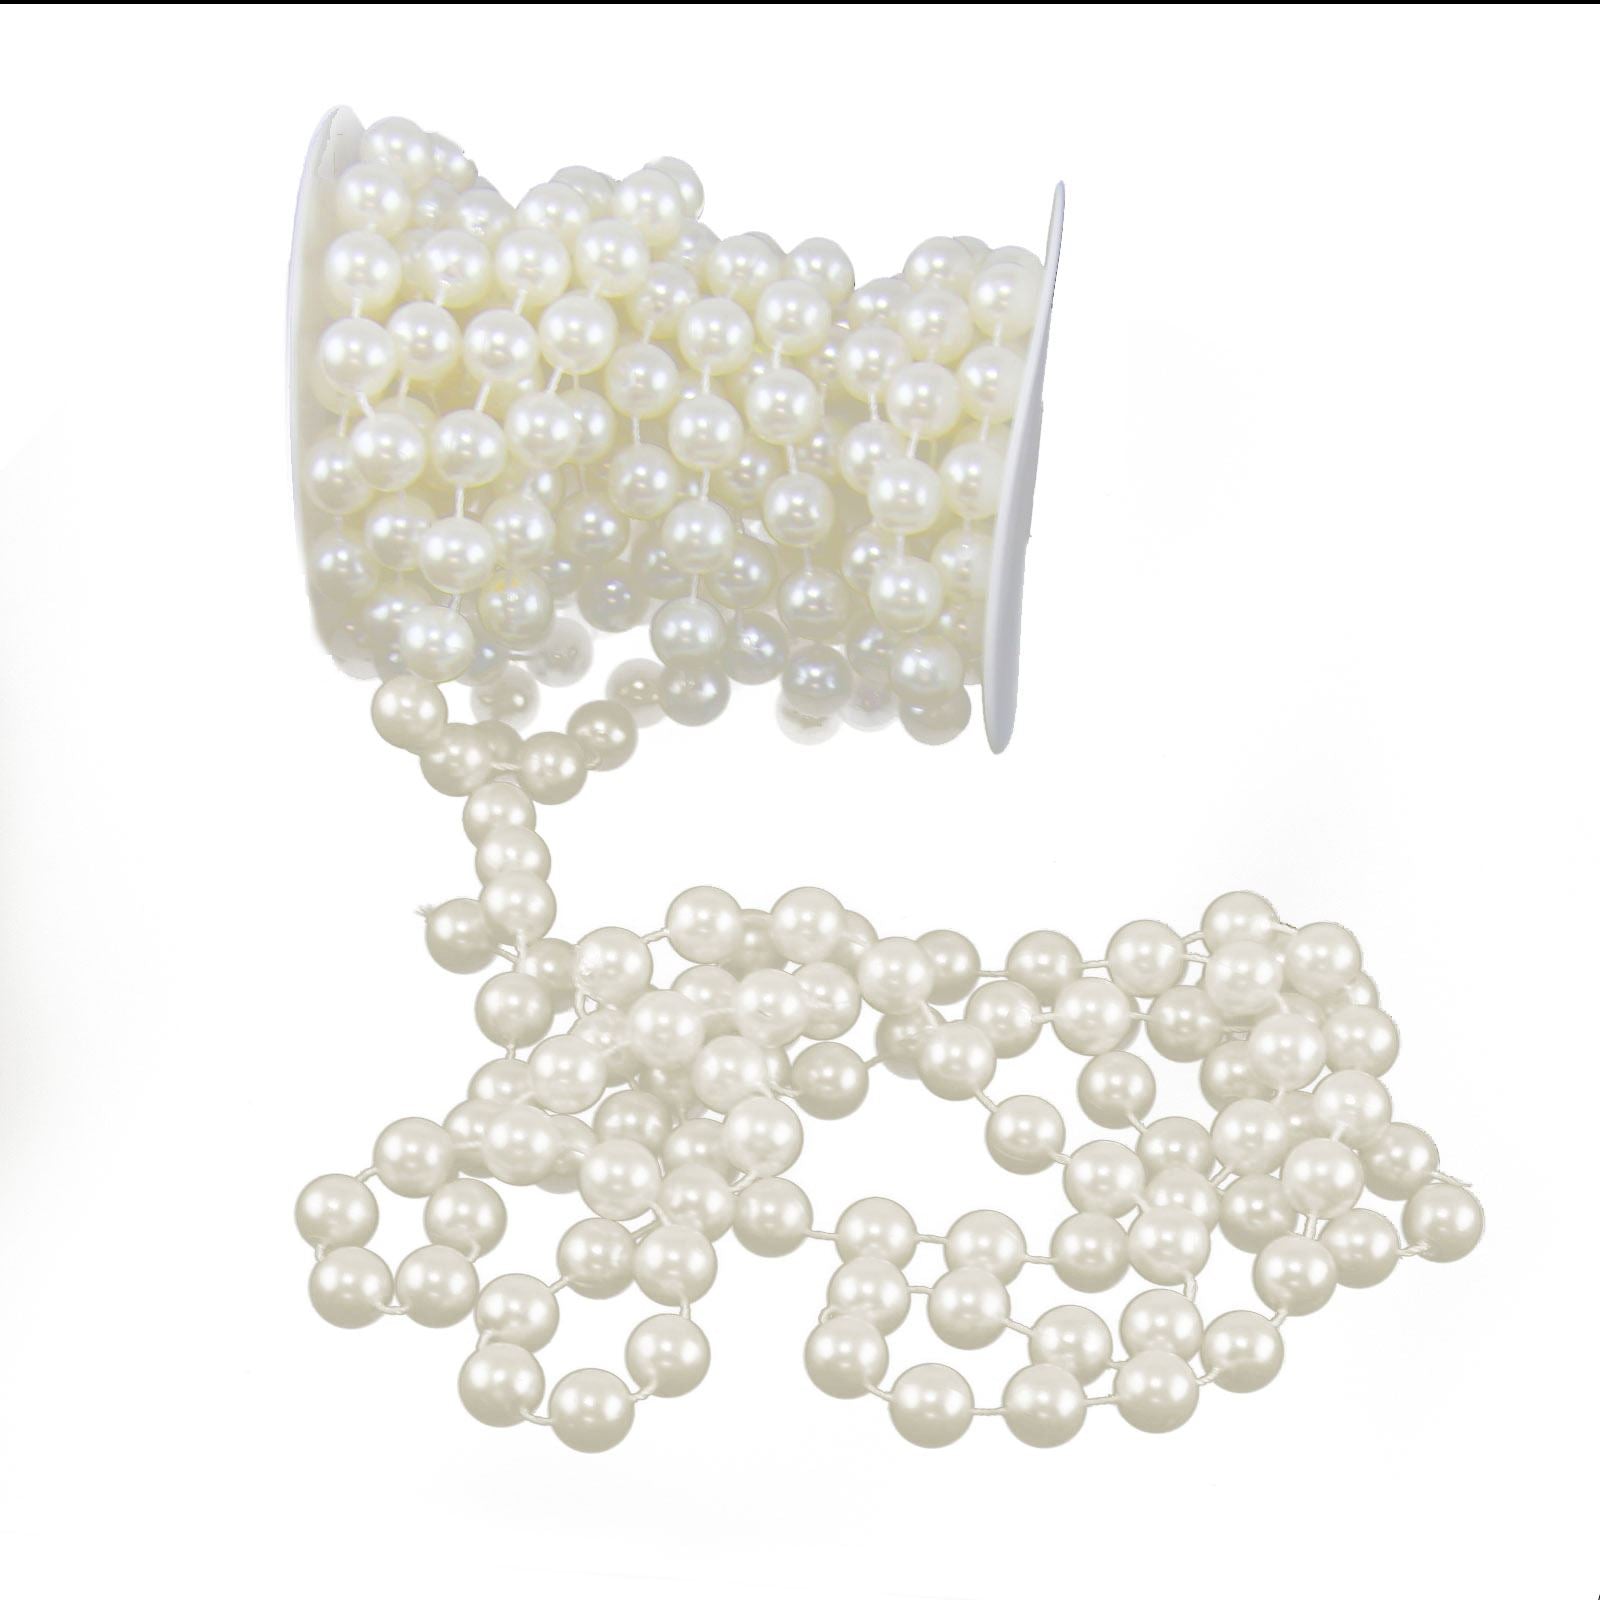 XL Ivory Pearl Garland - 12mm Jumbo Giant Pearls String Craft Wedding Roll